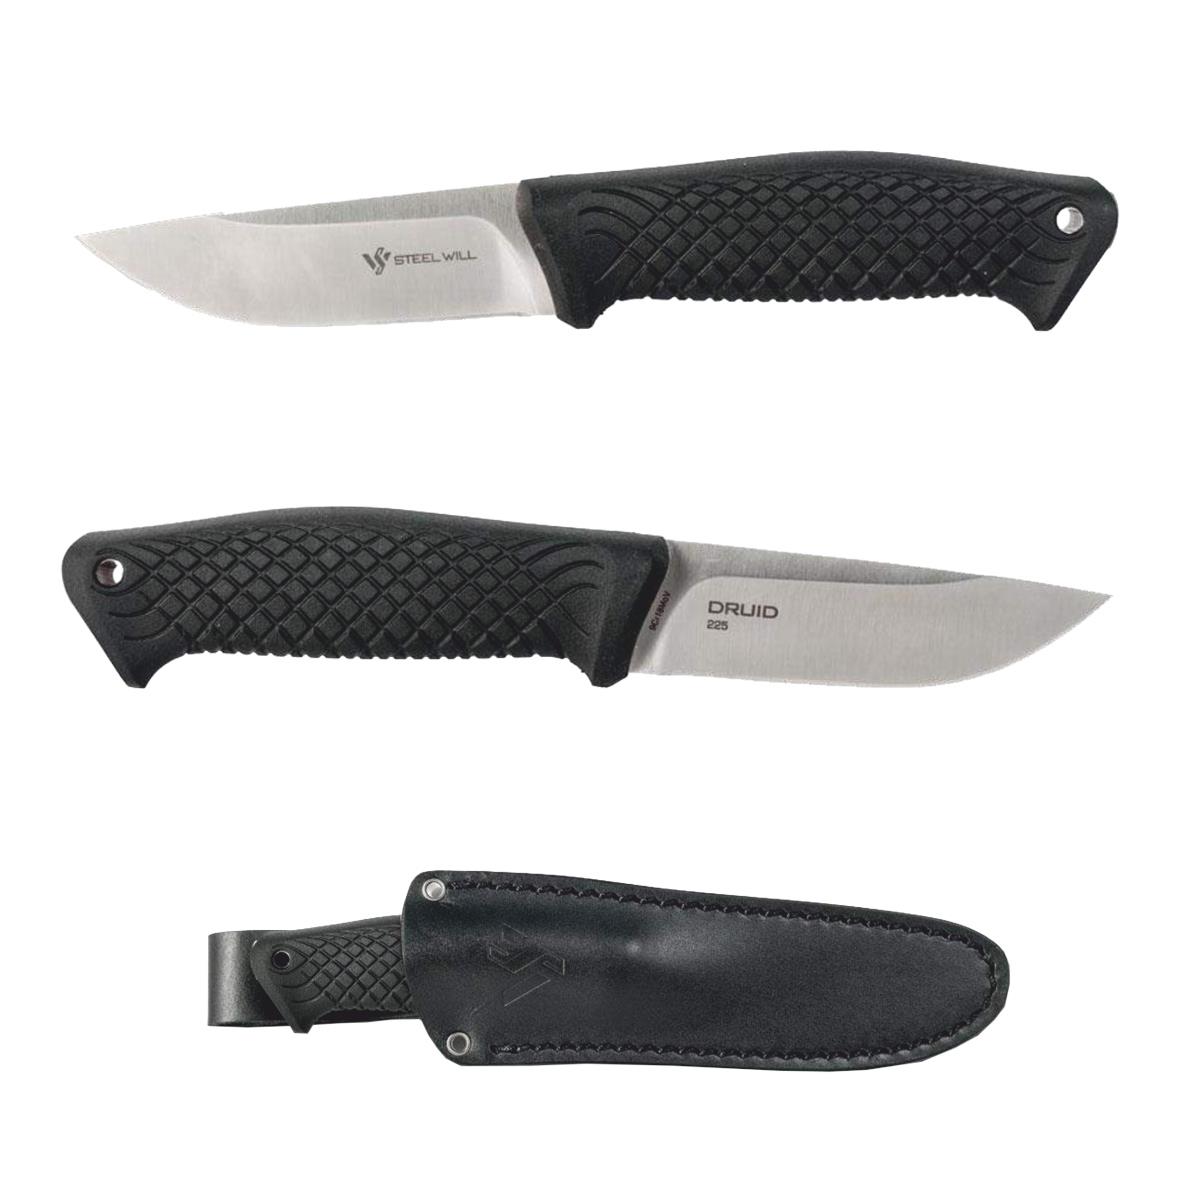 Нож 225 Druid Steel Will складной нож cutjack mini steel will c22m 1bk сталь d2